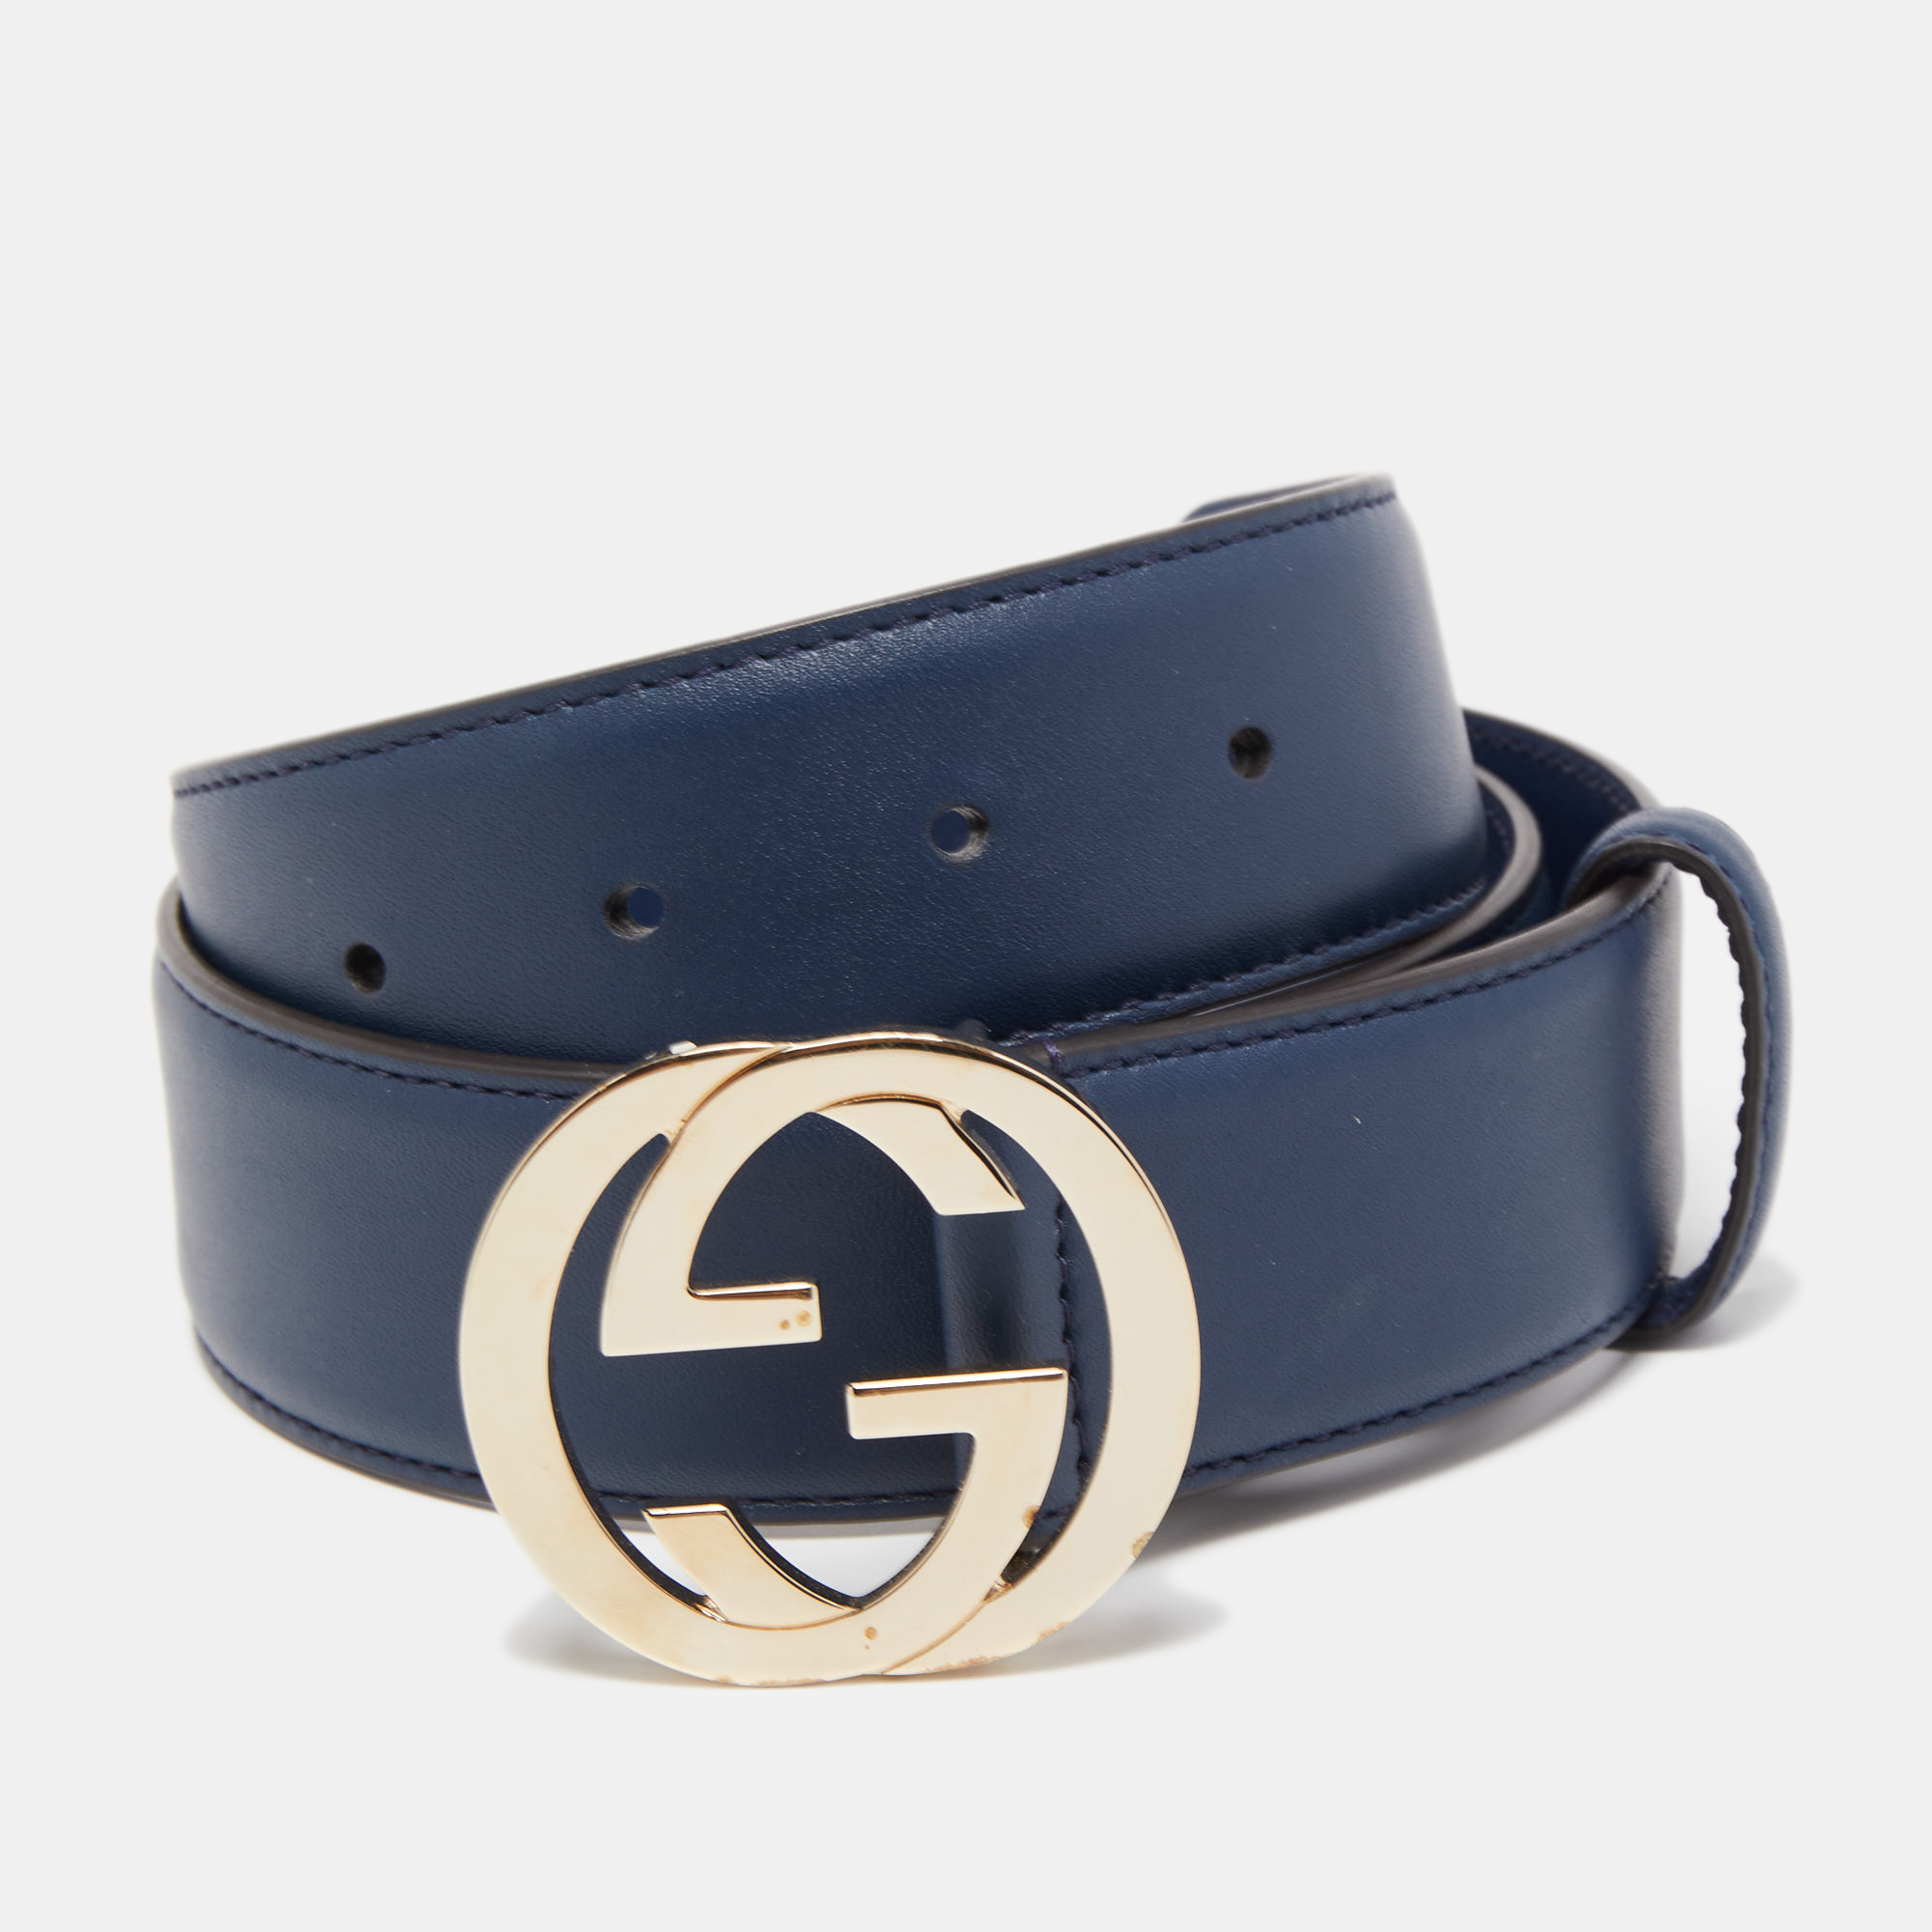 Gucci, Accessories, Gucci Belt With Blue Strap